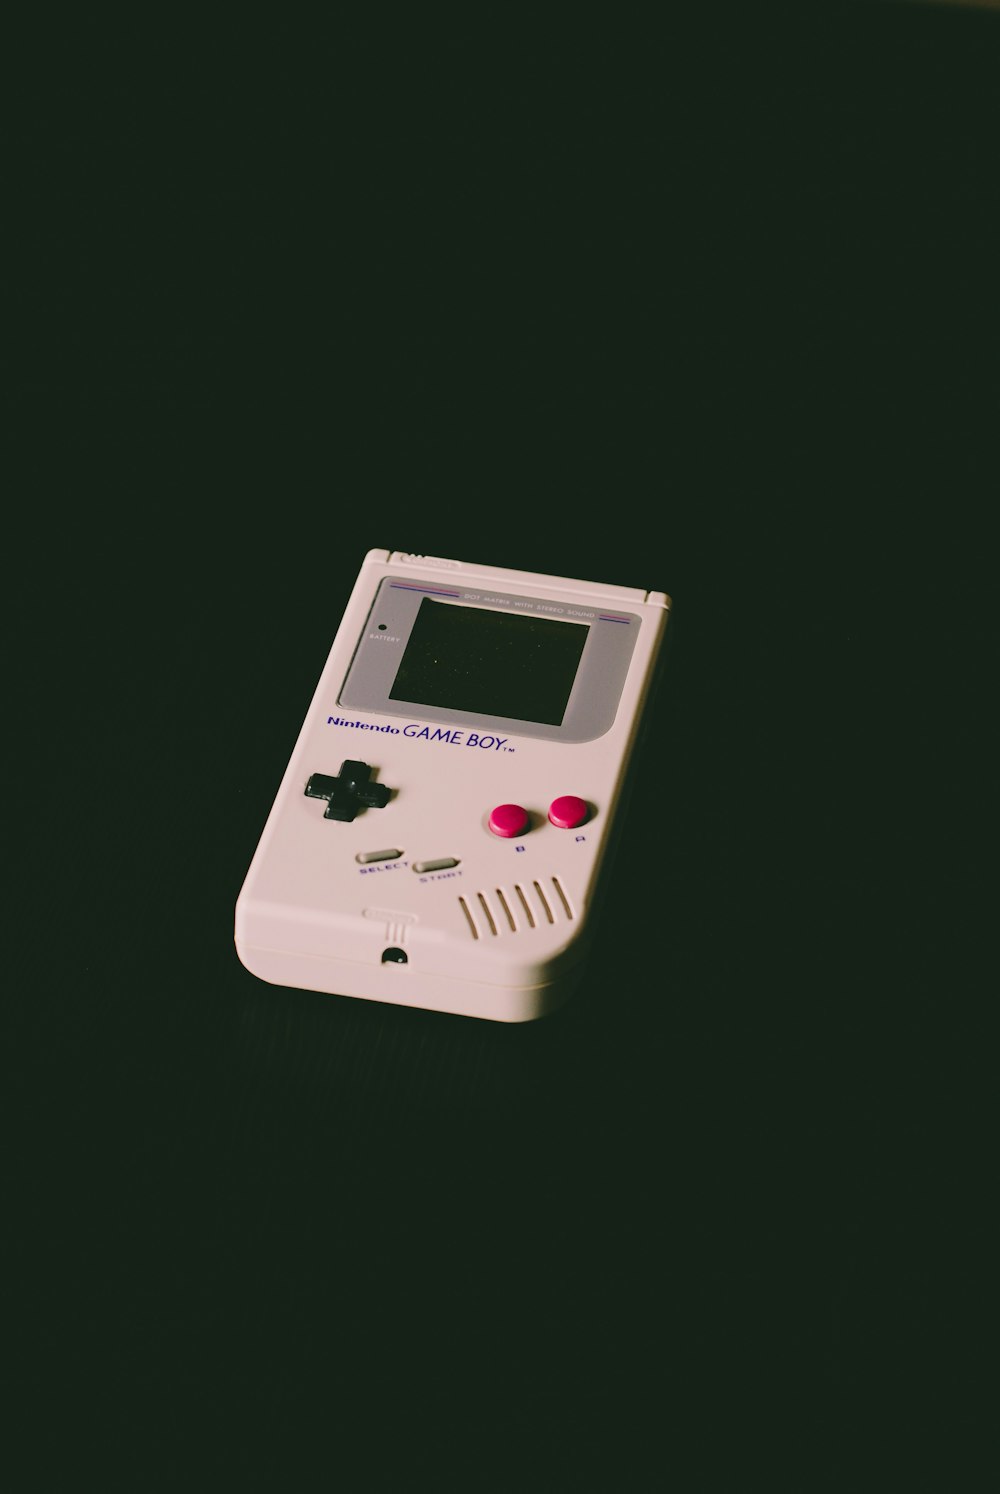 turned off Nintendo Game Boy